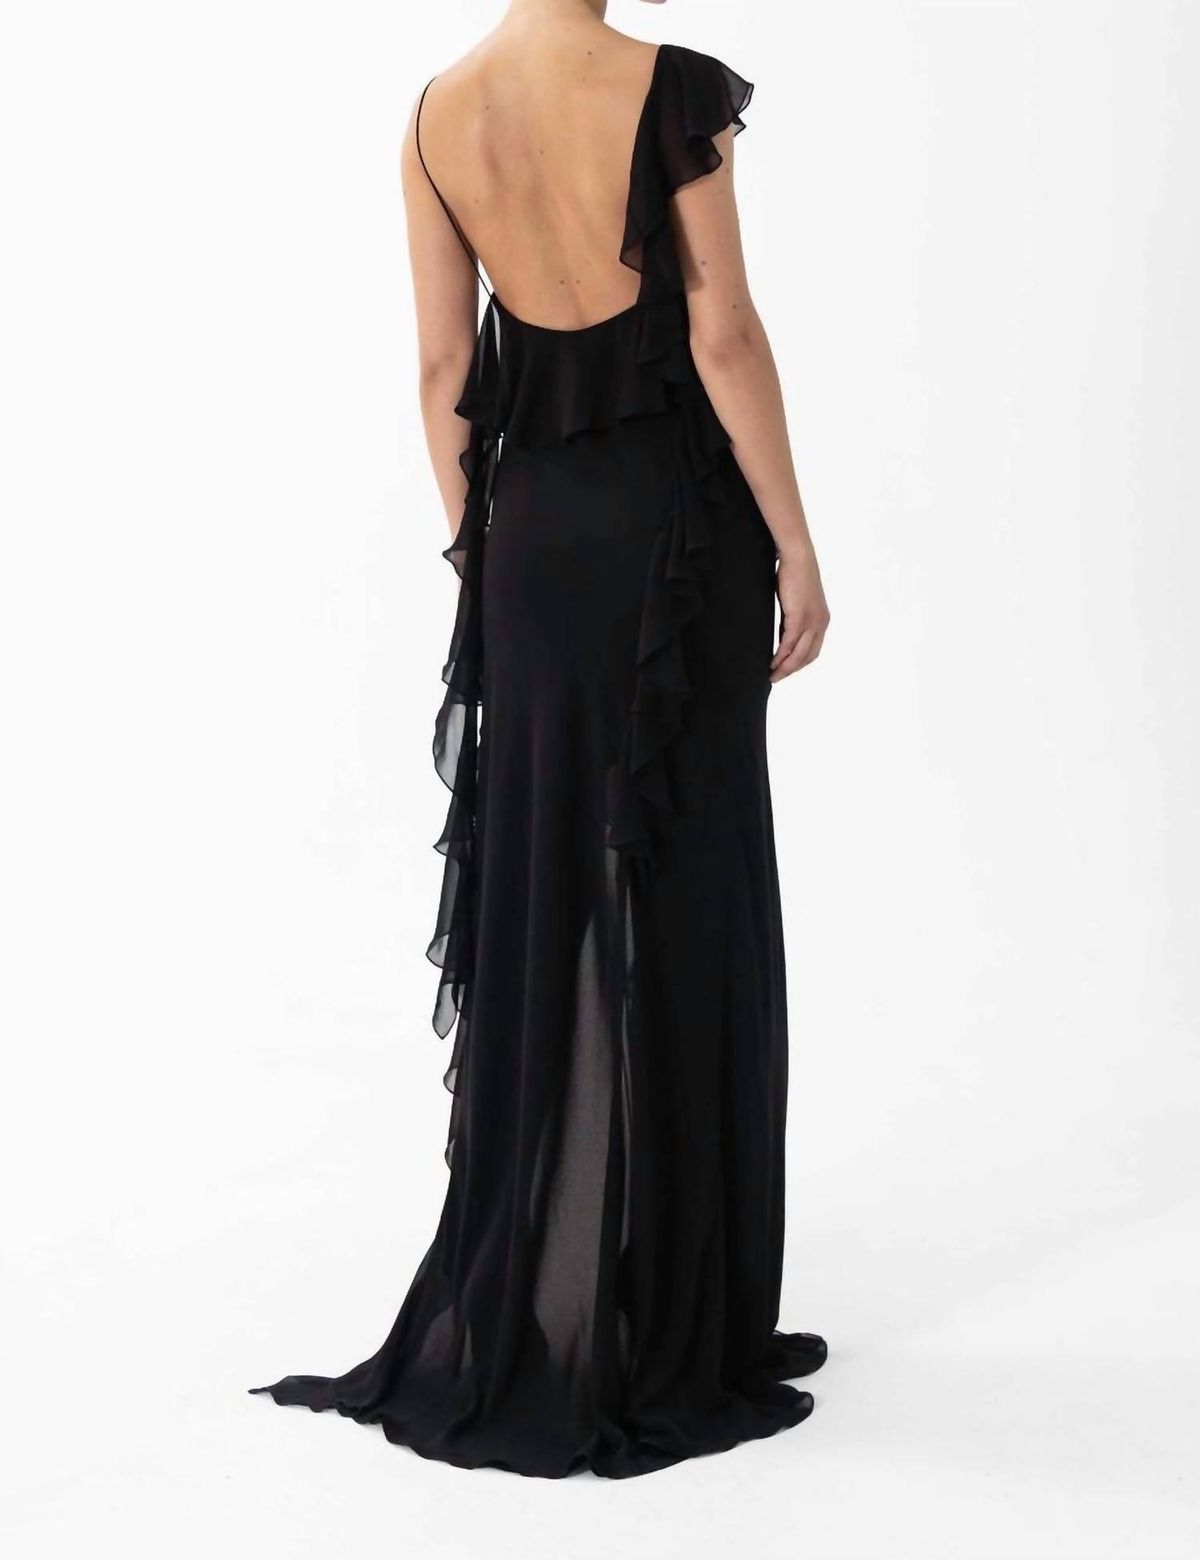 Style 1-1555043972-3236 RONNY KOBO Size S Plunge Black Side Slit Dress on Queenly